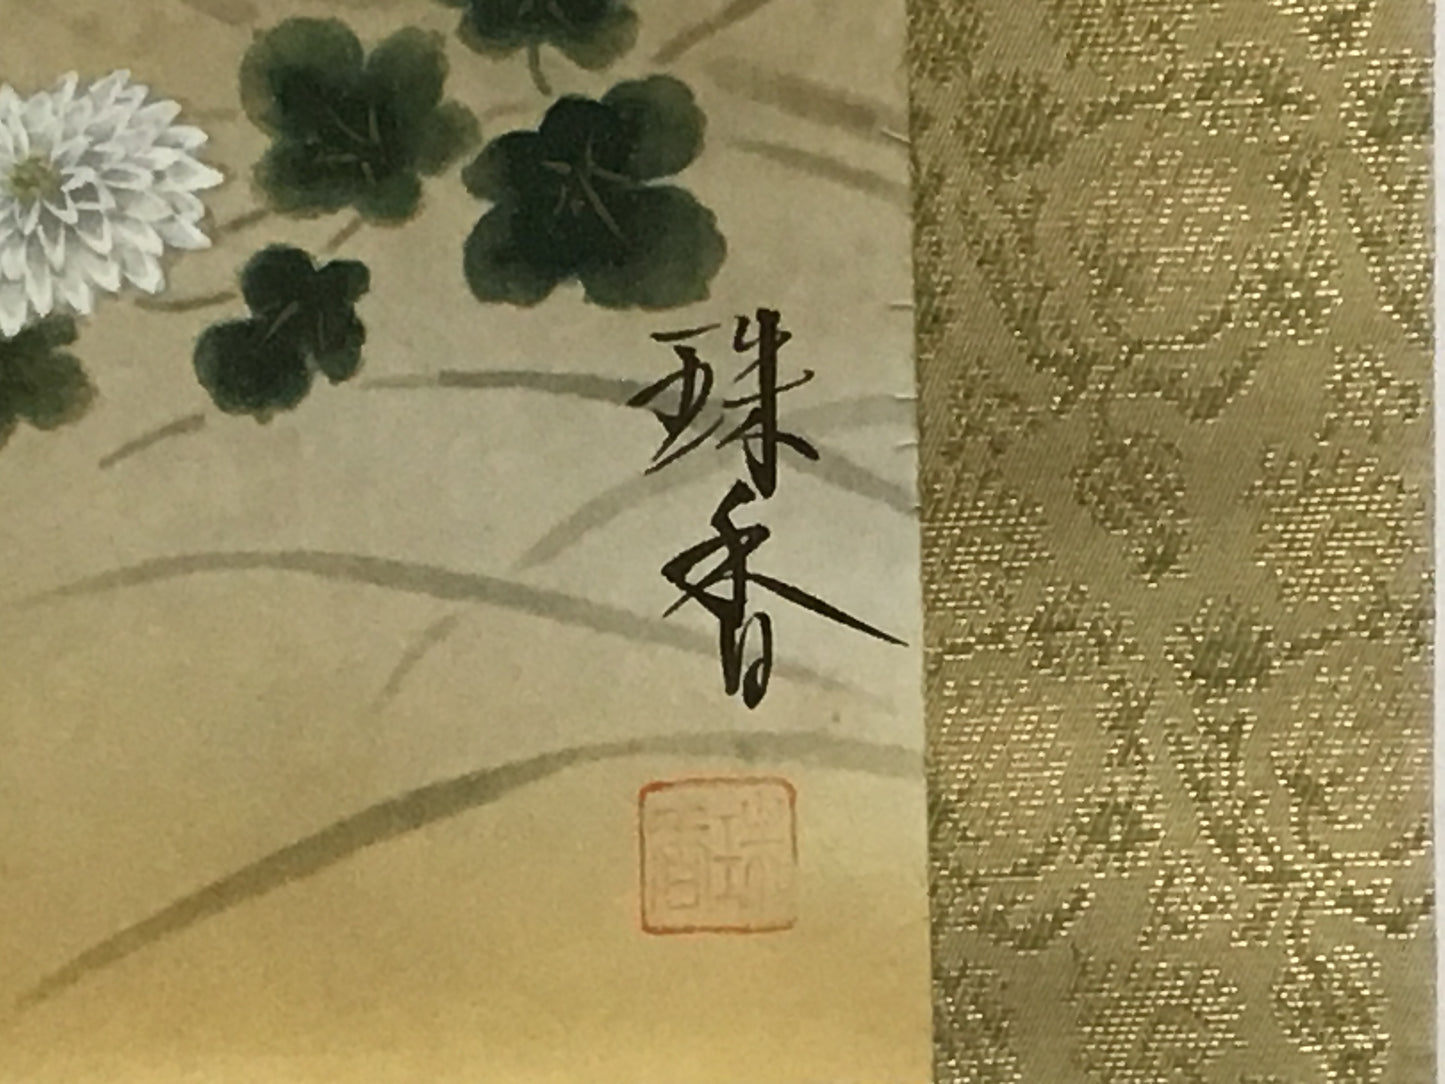 Y2207 KAKEJIKU Flowers four seasons signed box 178x52cm Japan hanging scroll